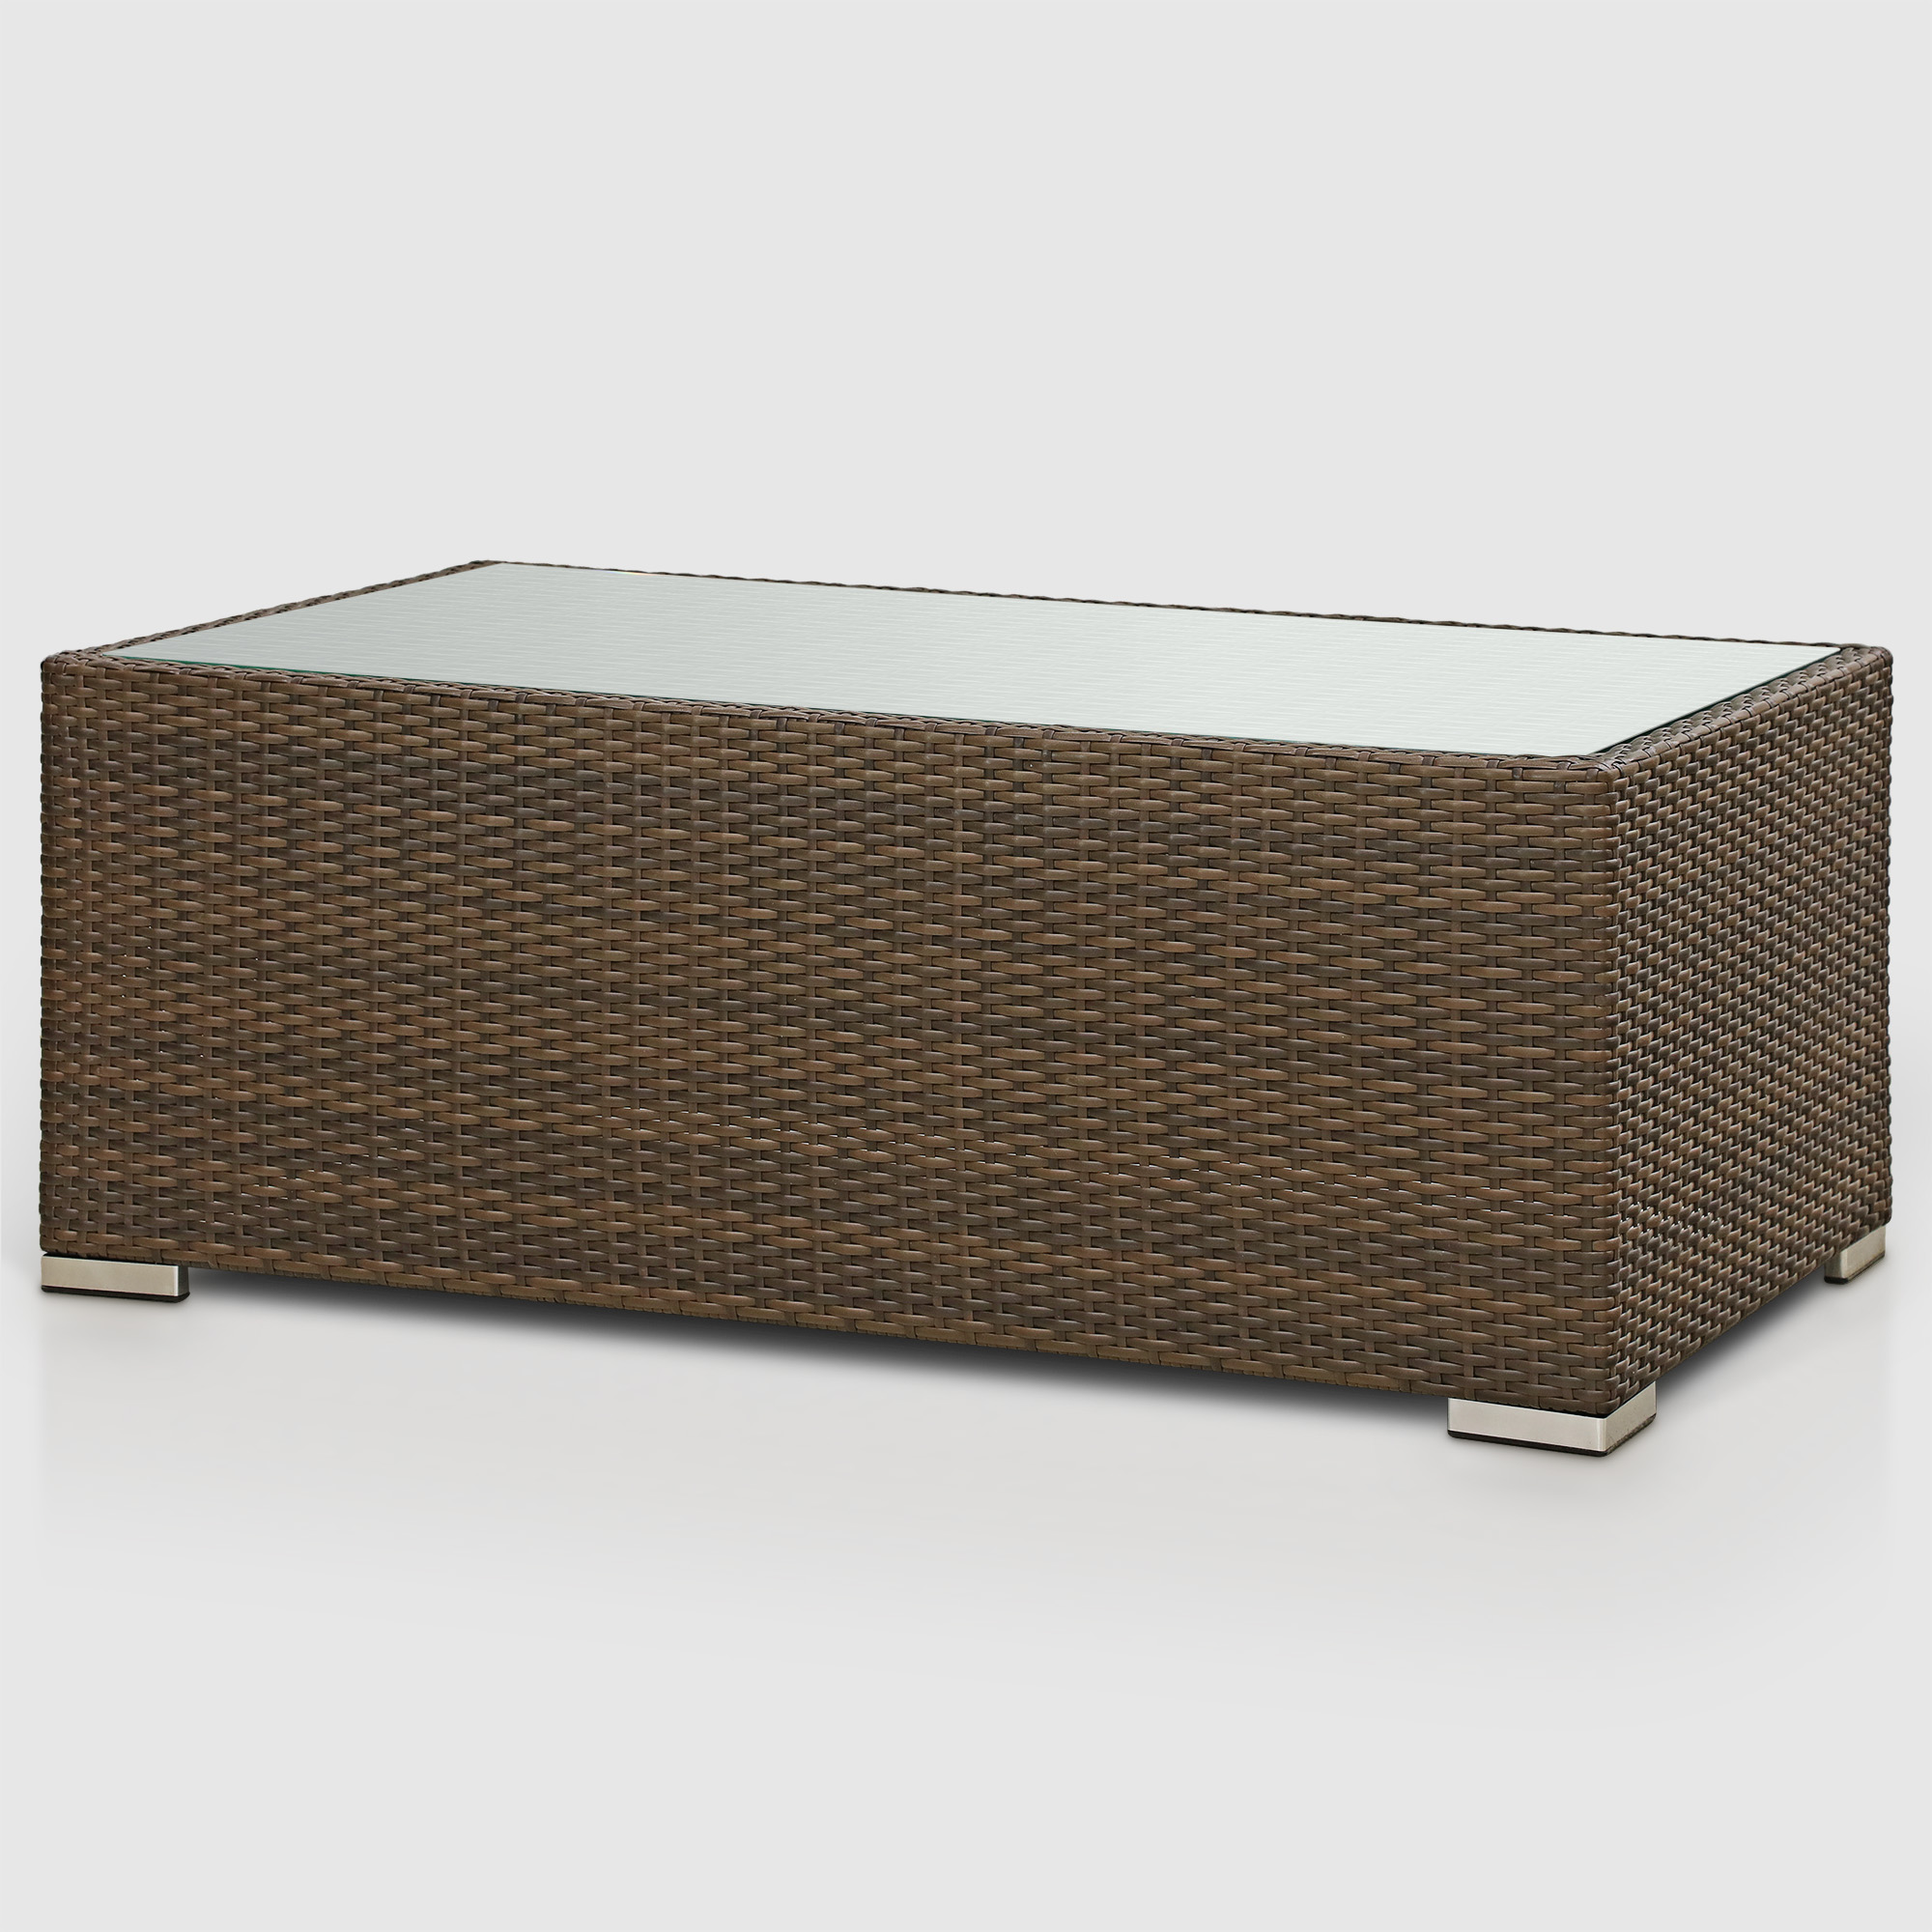 Комплект мебели Ns Rattan Cleo коричневый с бежевым 7 предметов, цвет бежевый, размер 224х88х70 - фото 12